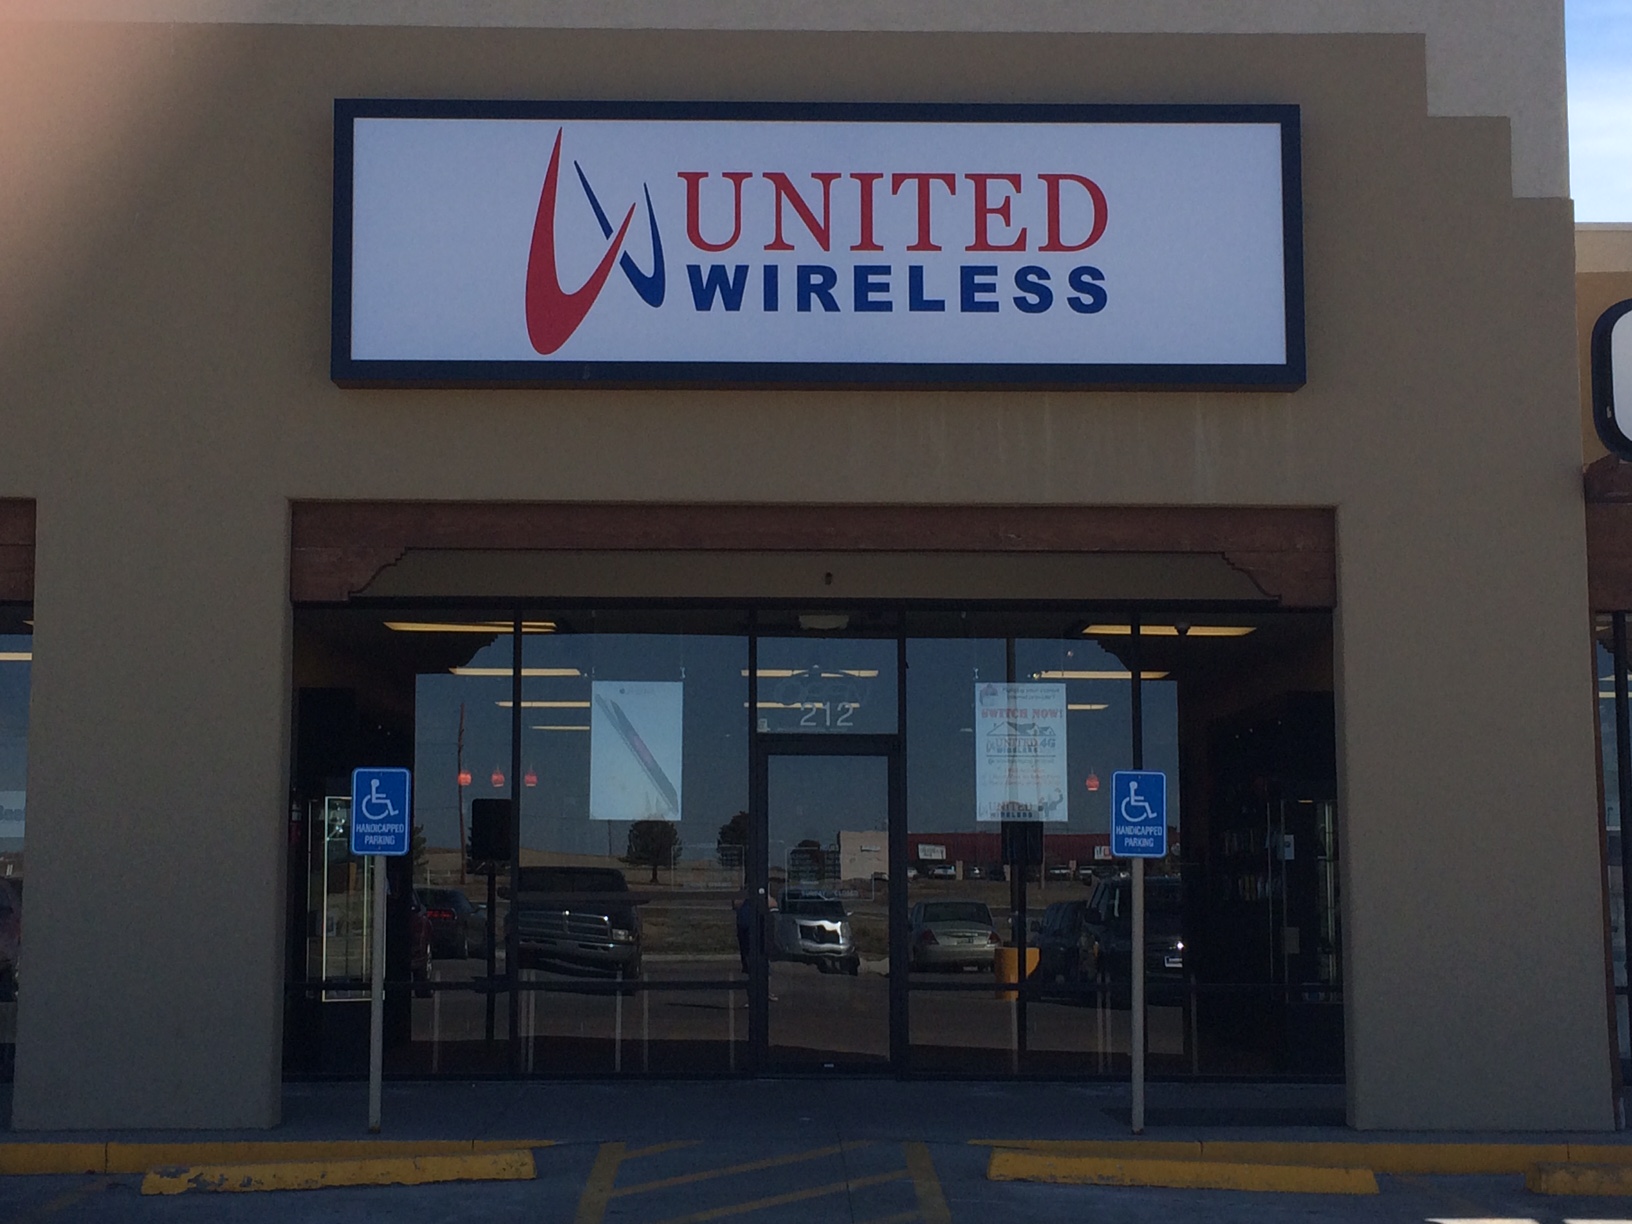 United Wireless Communications, Inc.